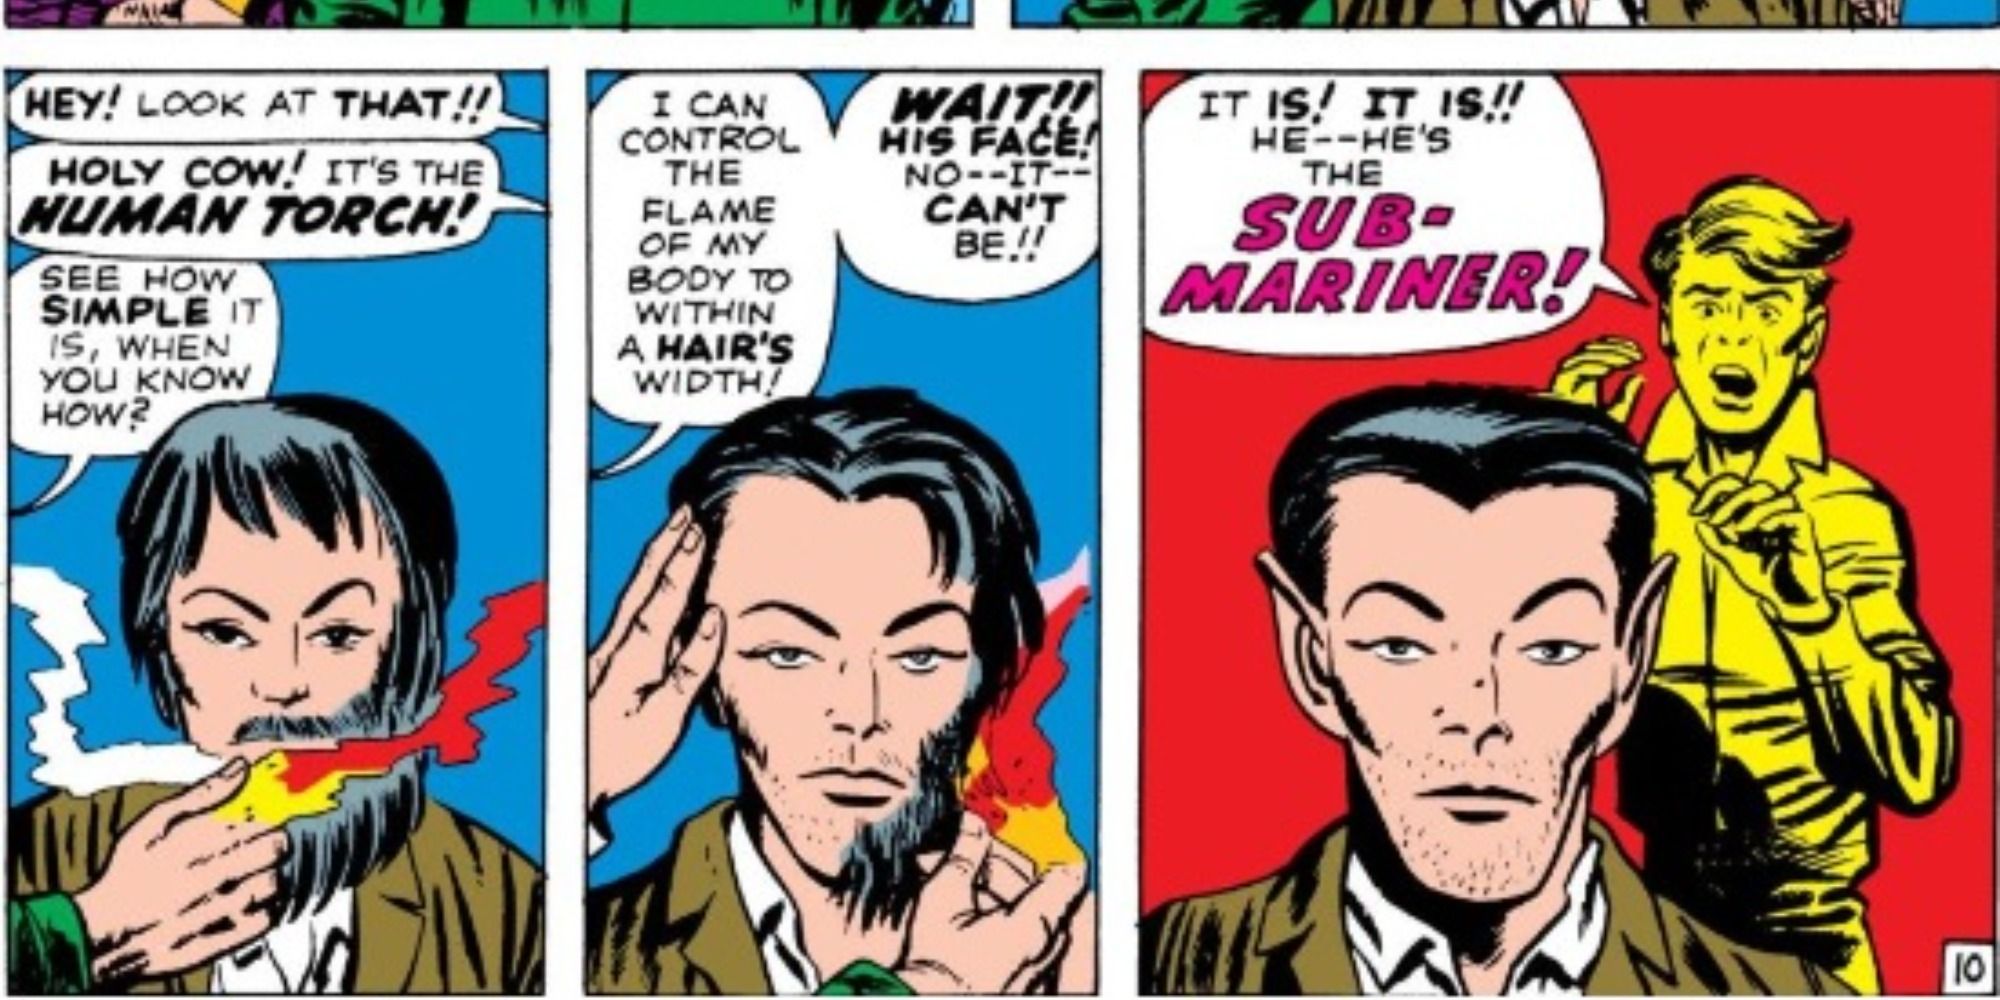 Human Torch burns off the beard of Namor in Fantastic Four comic.